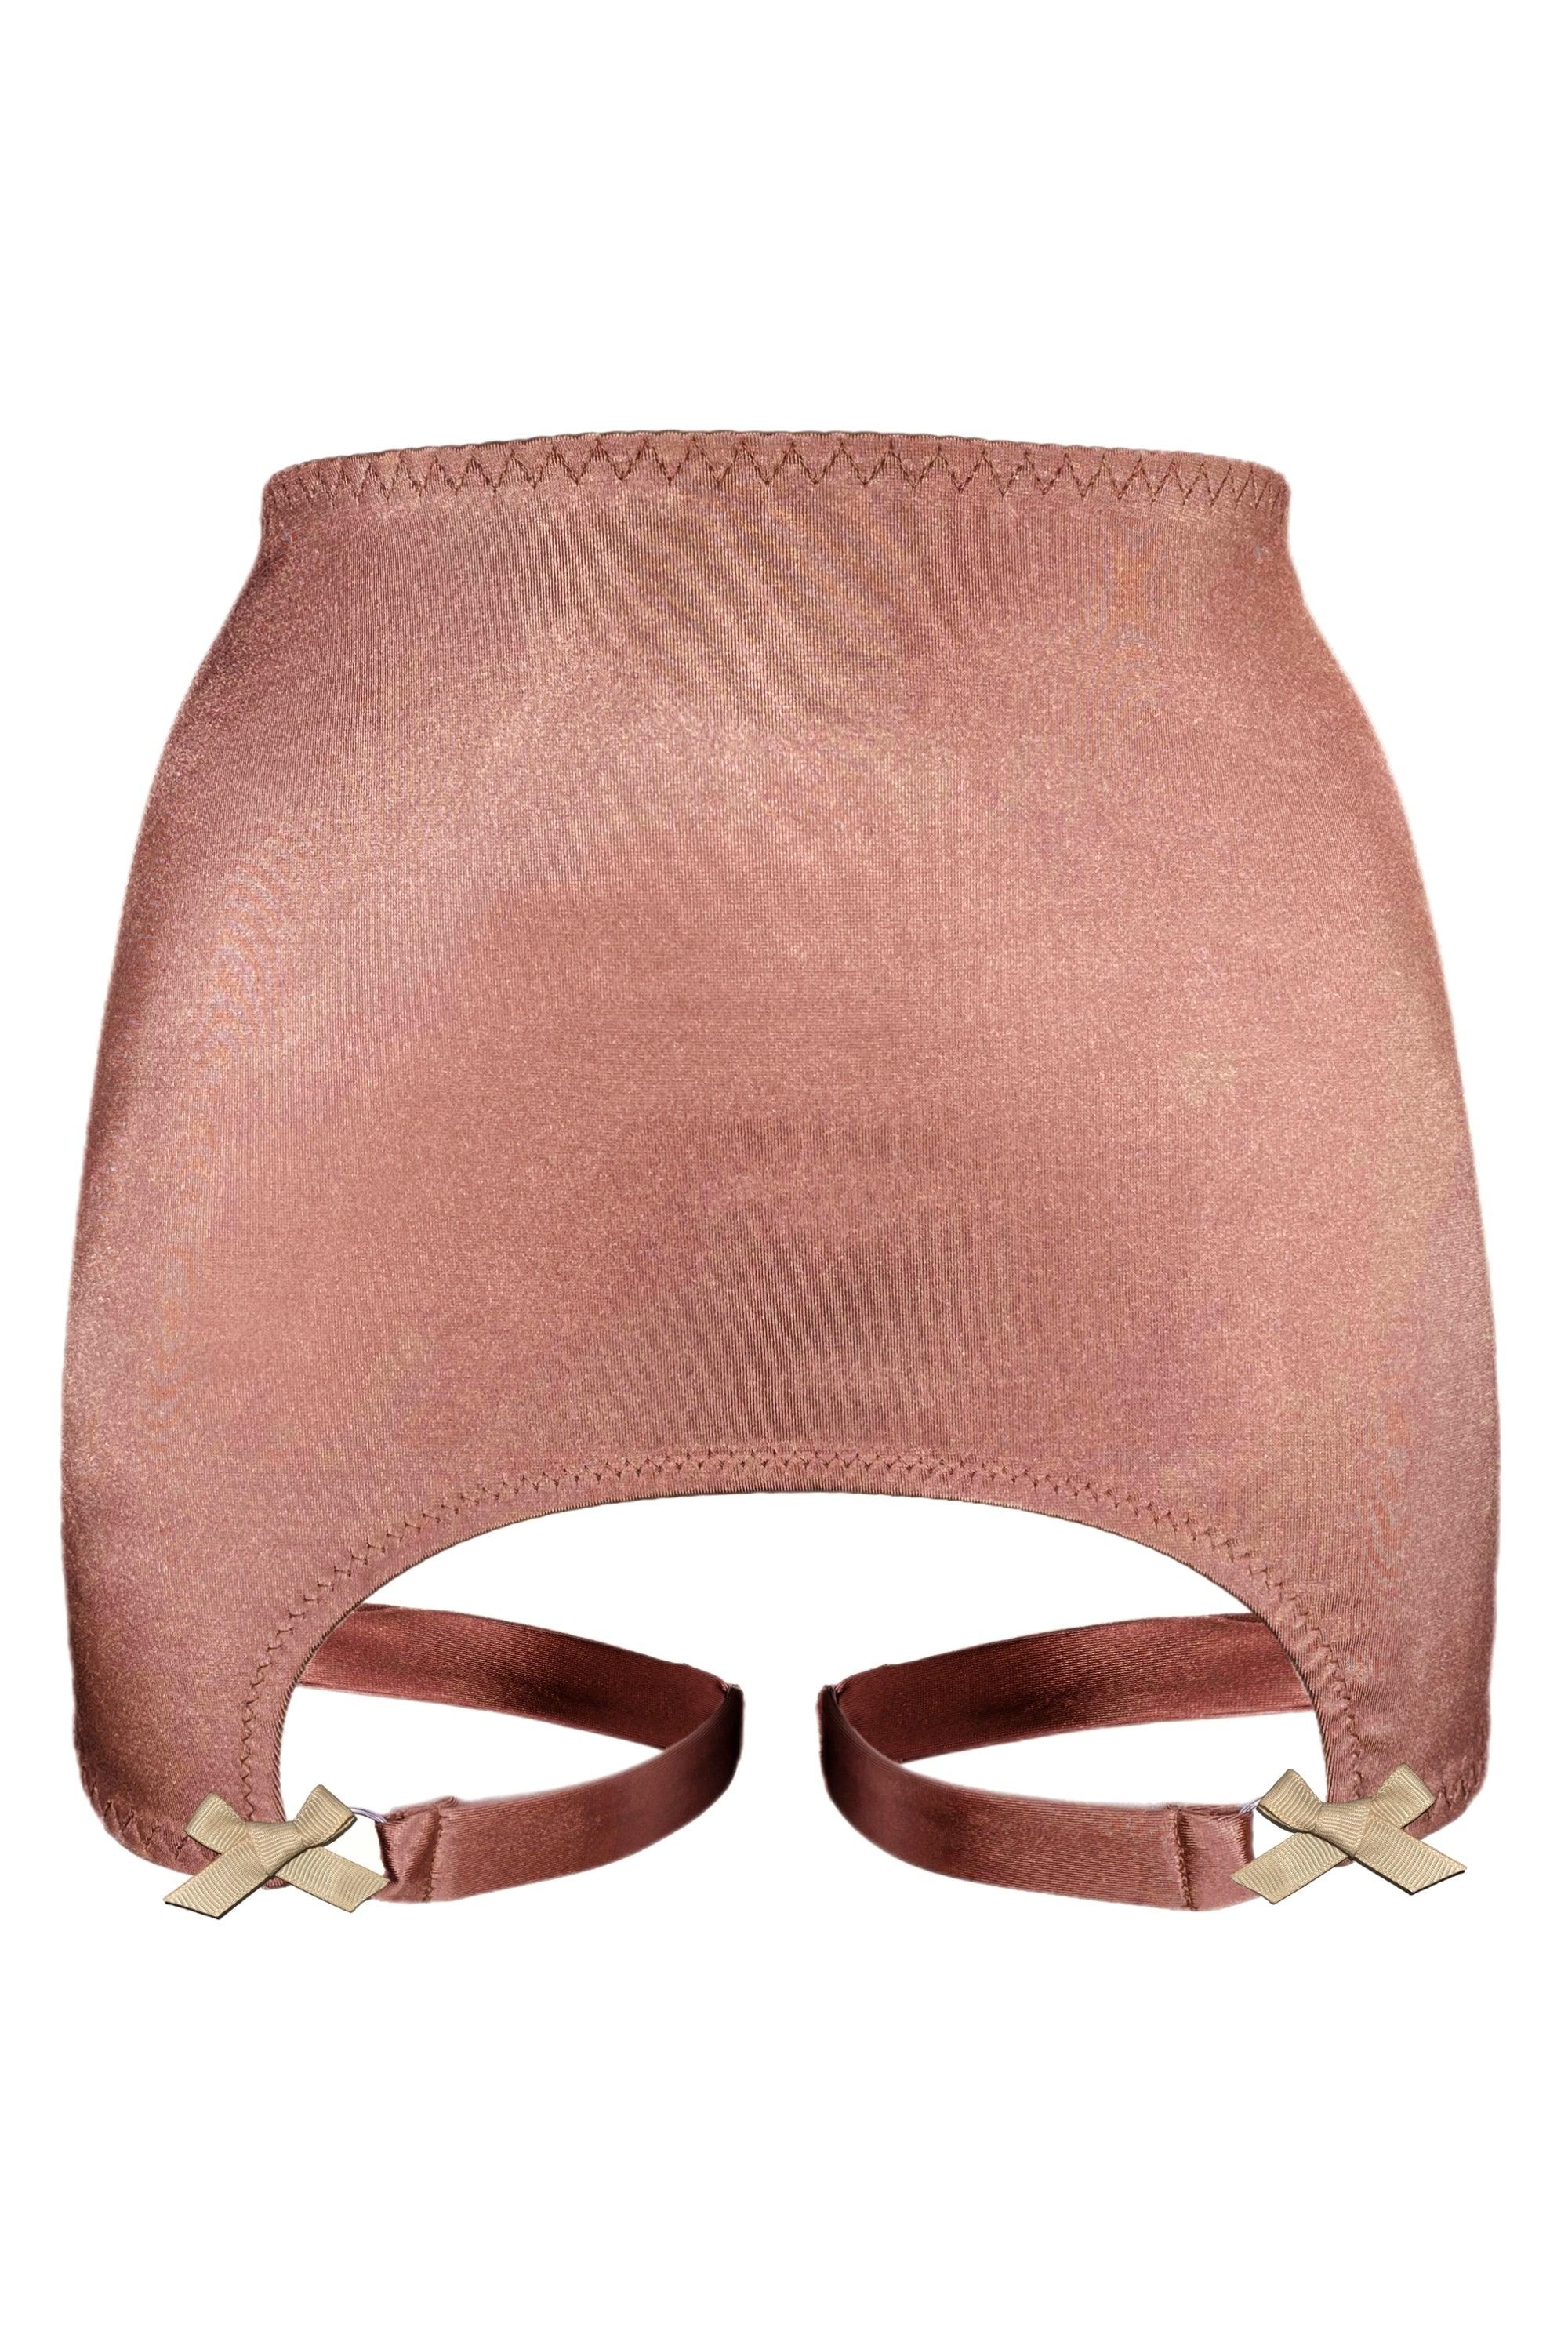 Joli Gloss retro pink none-garter belt - yesUndress